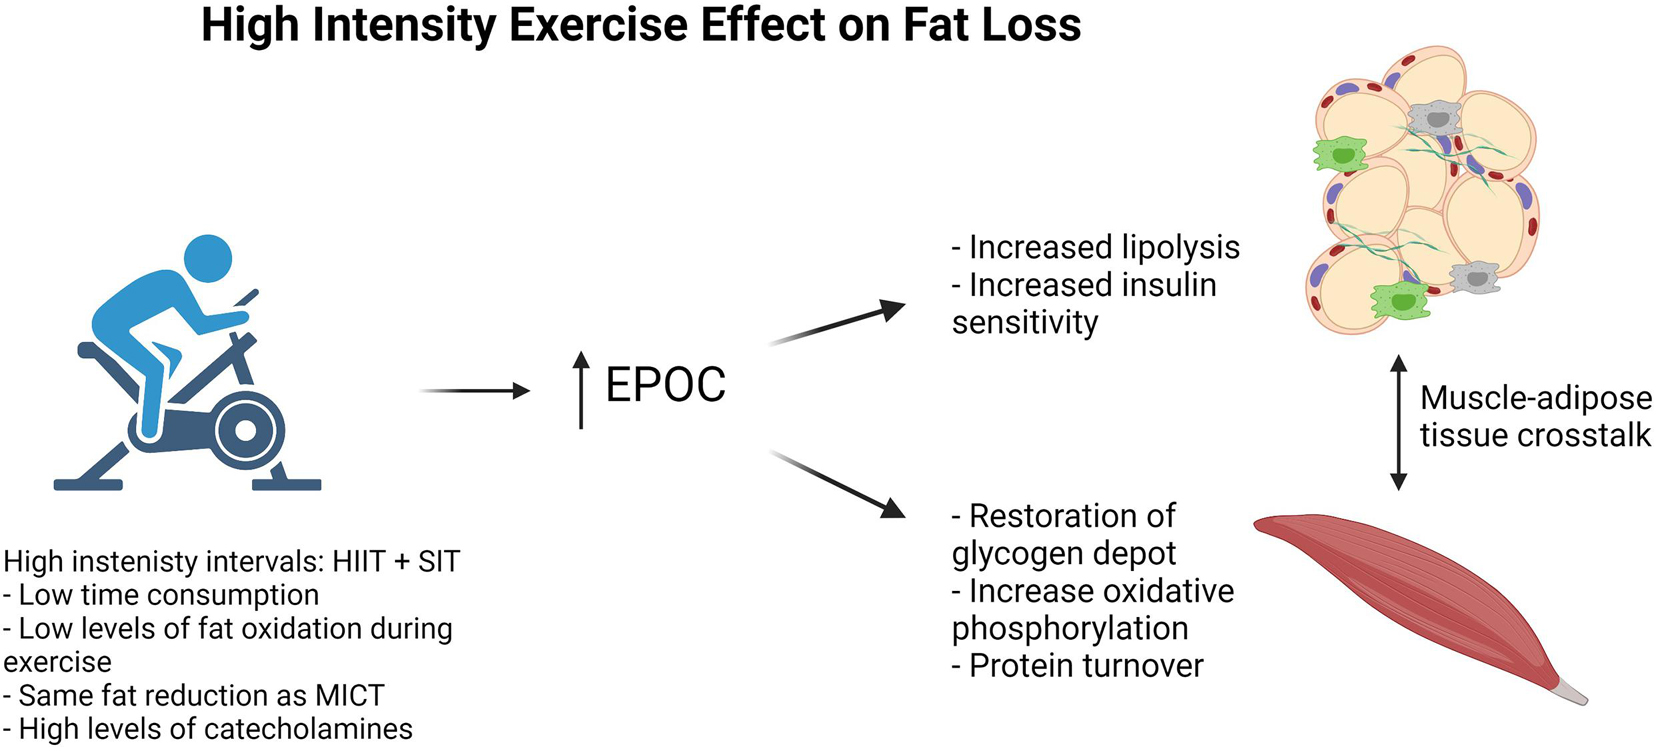 Improved fat utilization potential